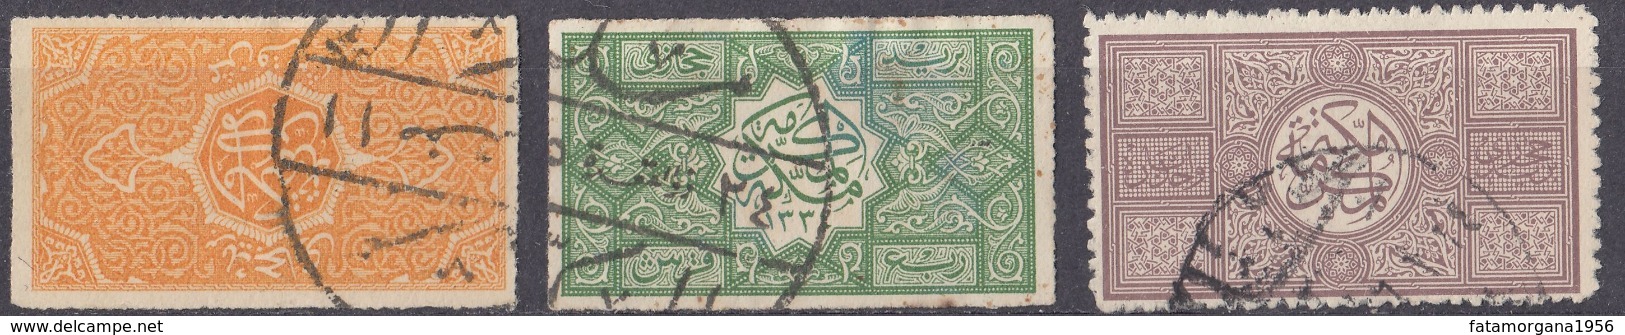 ARABIA SAUDITA, Regno Di Hedjaz - 1916/1917 - Lotto Composto Da 3 Valori Usati: Yvert 4, 5 E 8. - Arabia Saudita